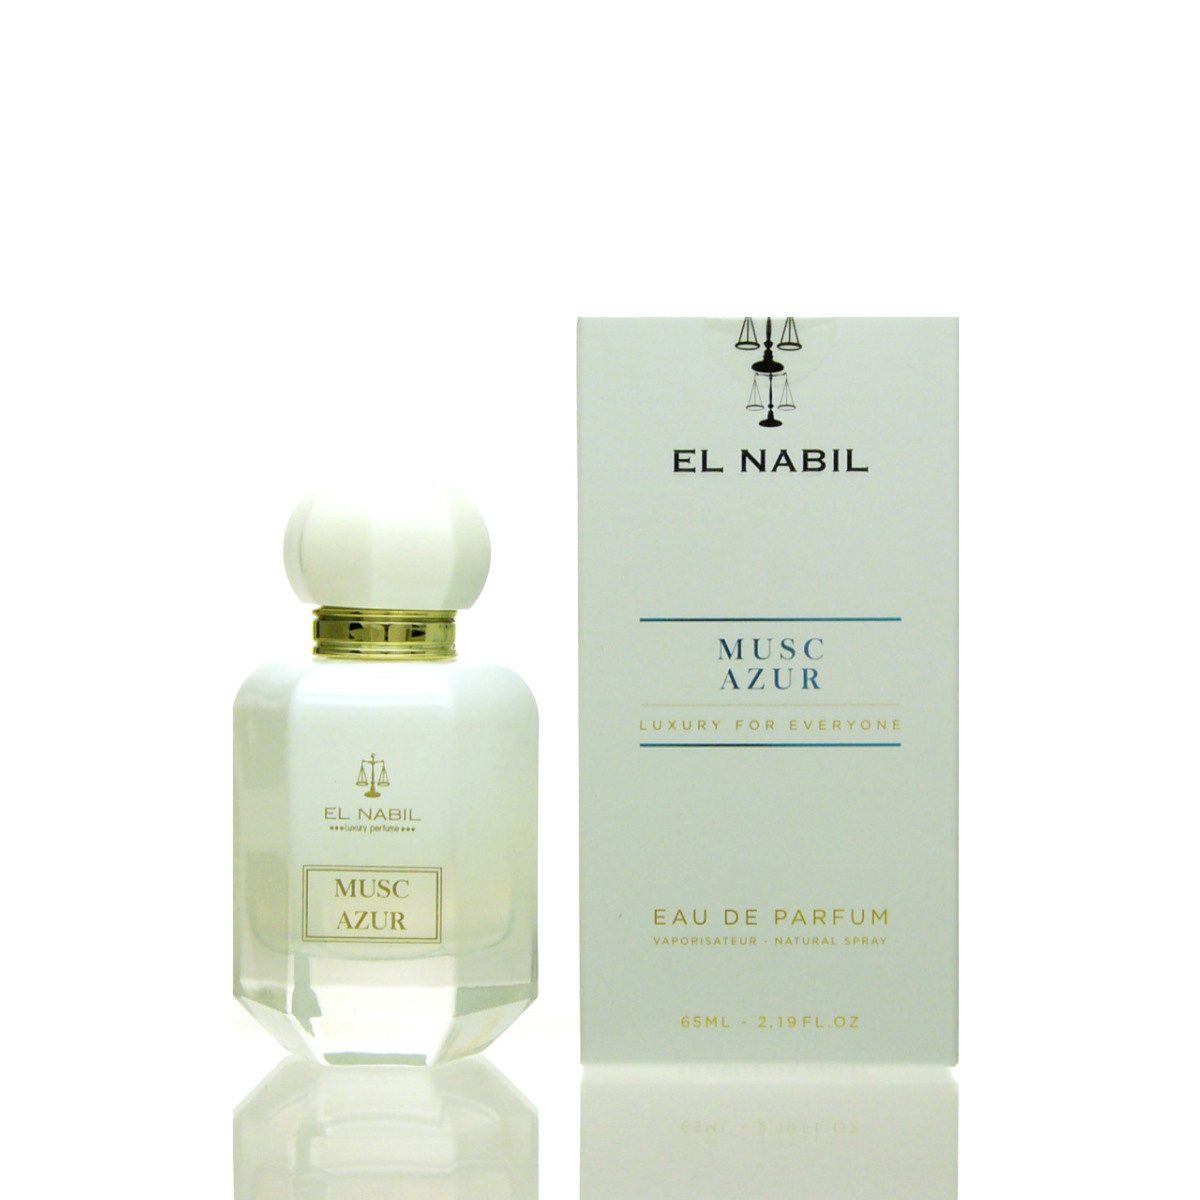 El Nabil Eau de Parfum El Nabil Musc Azur Eau de Parfum 65 ml